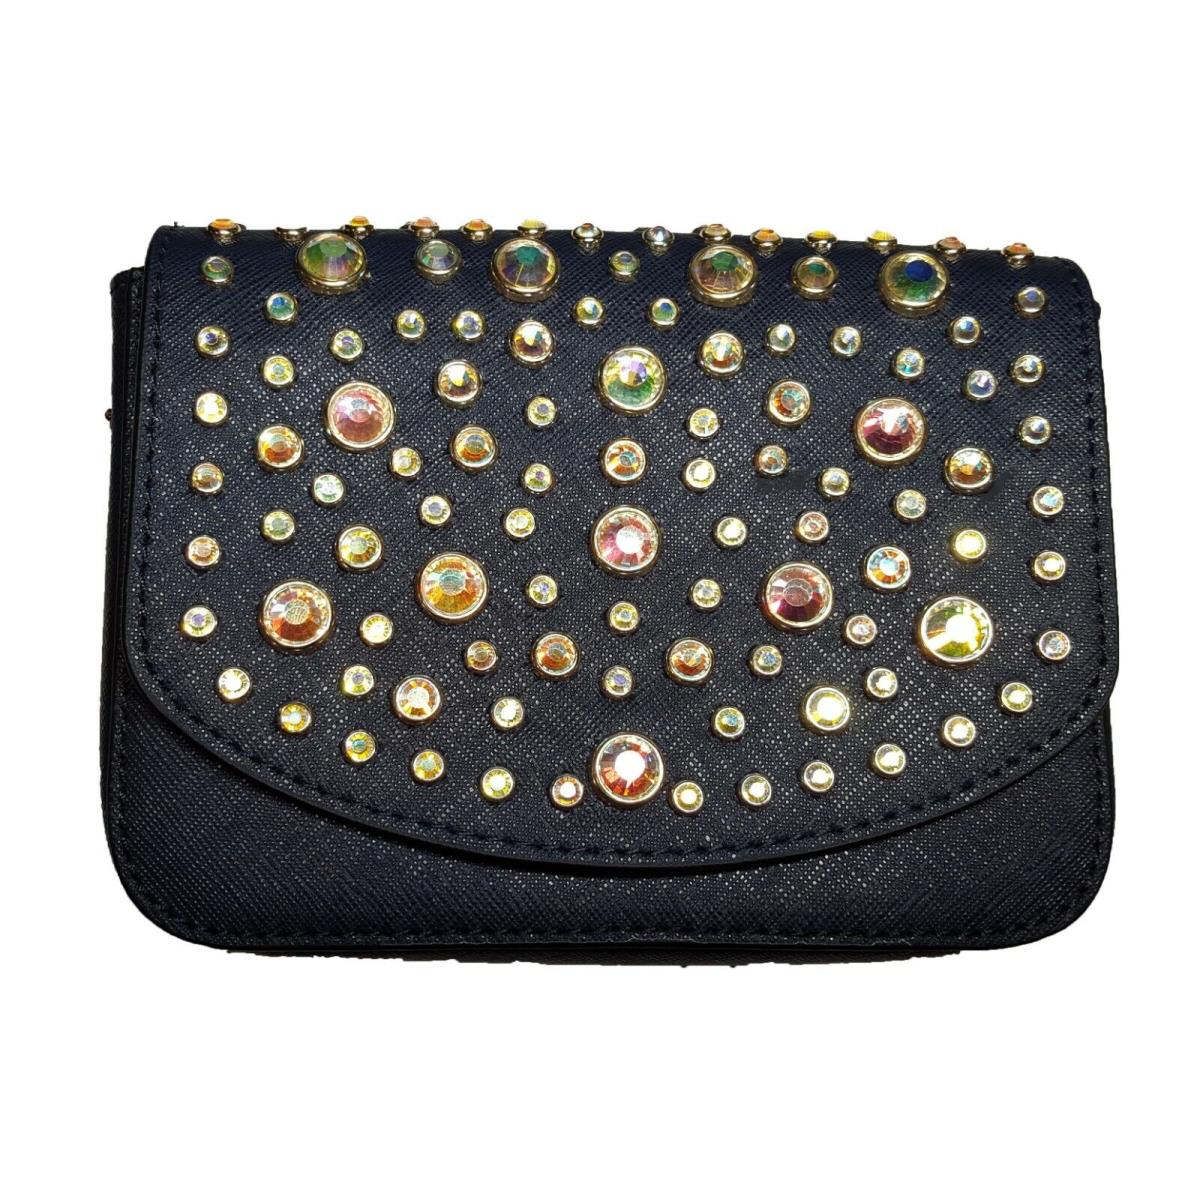 Juicy Couture Sophia Mini Bag with Stones